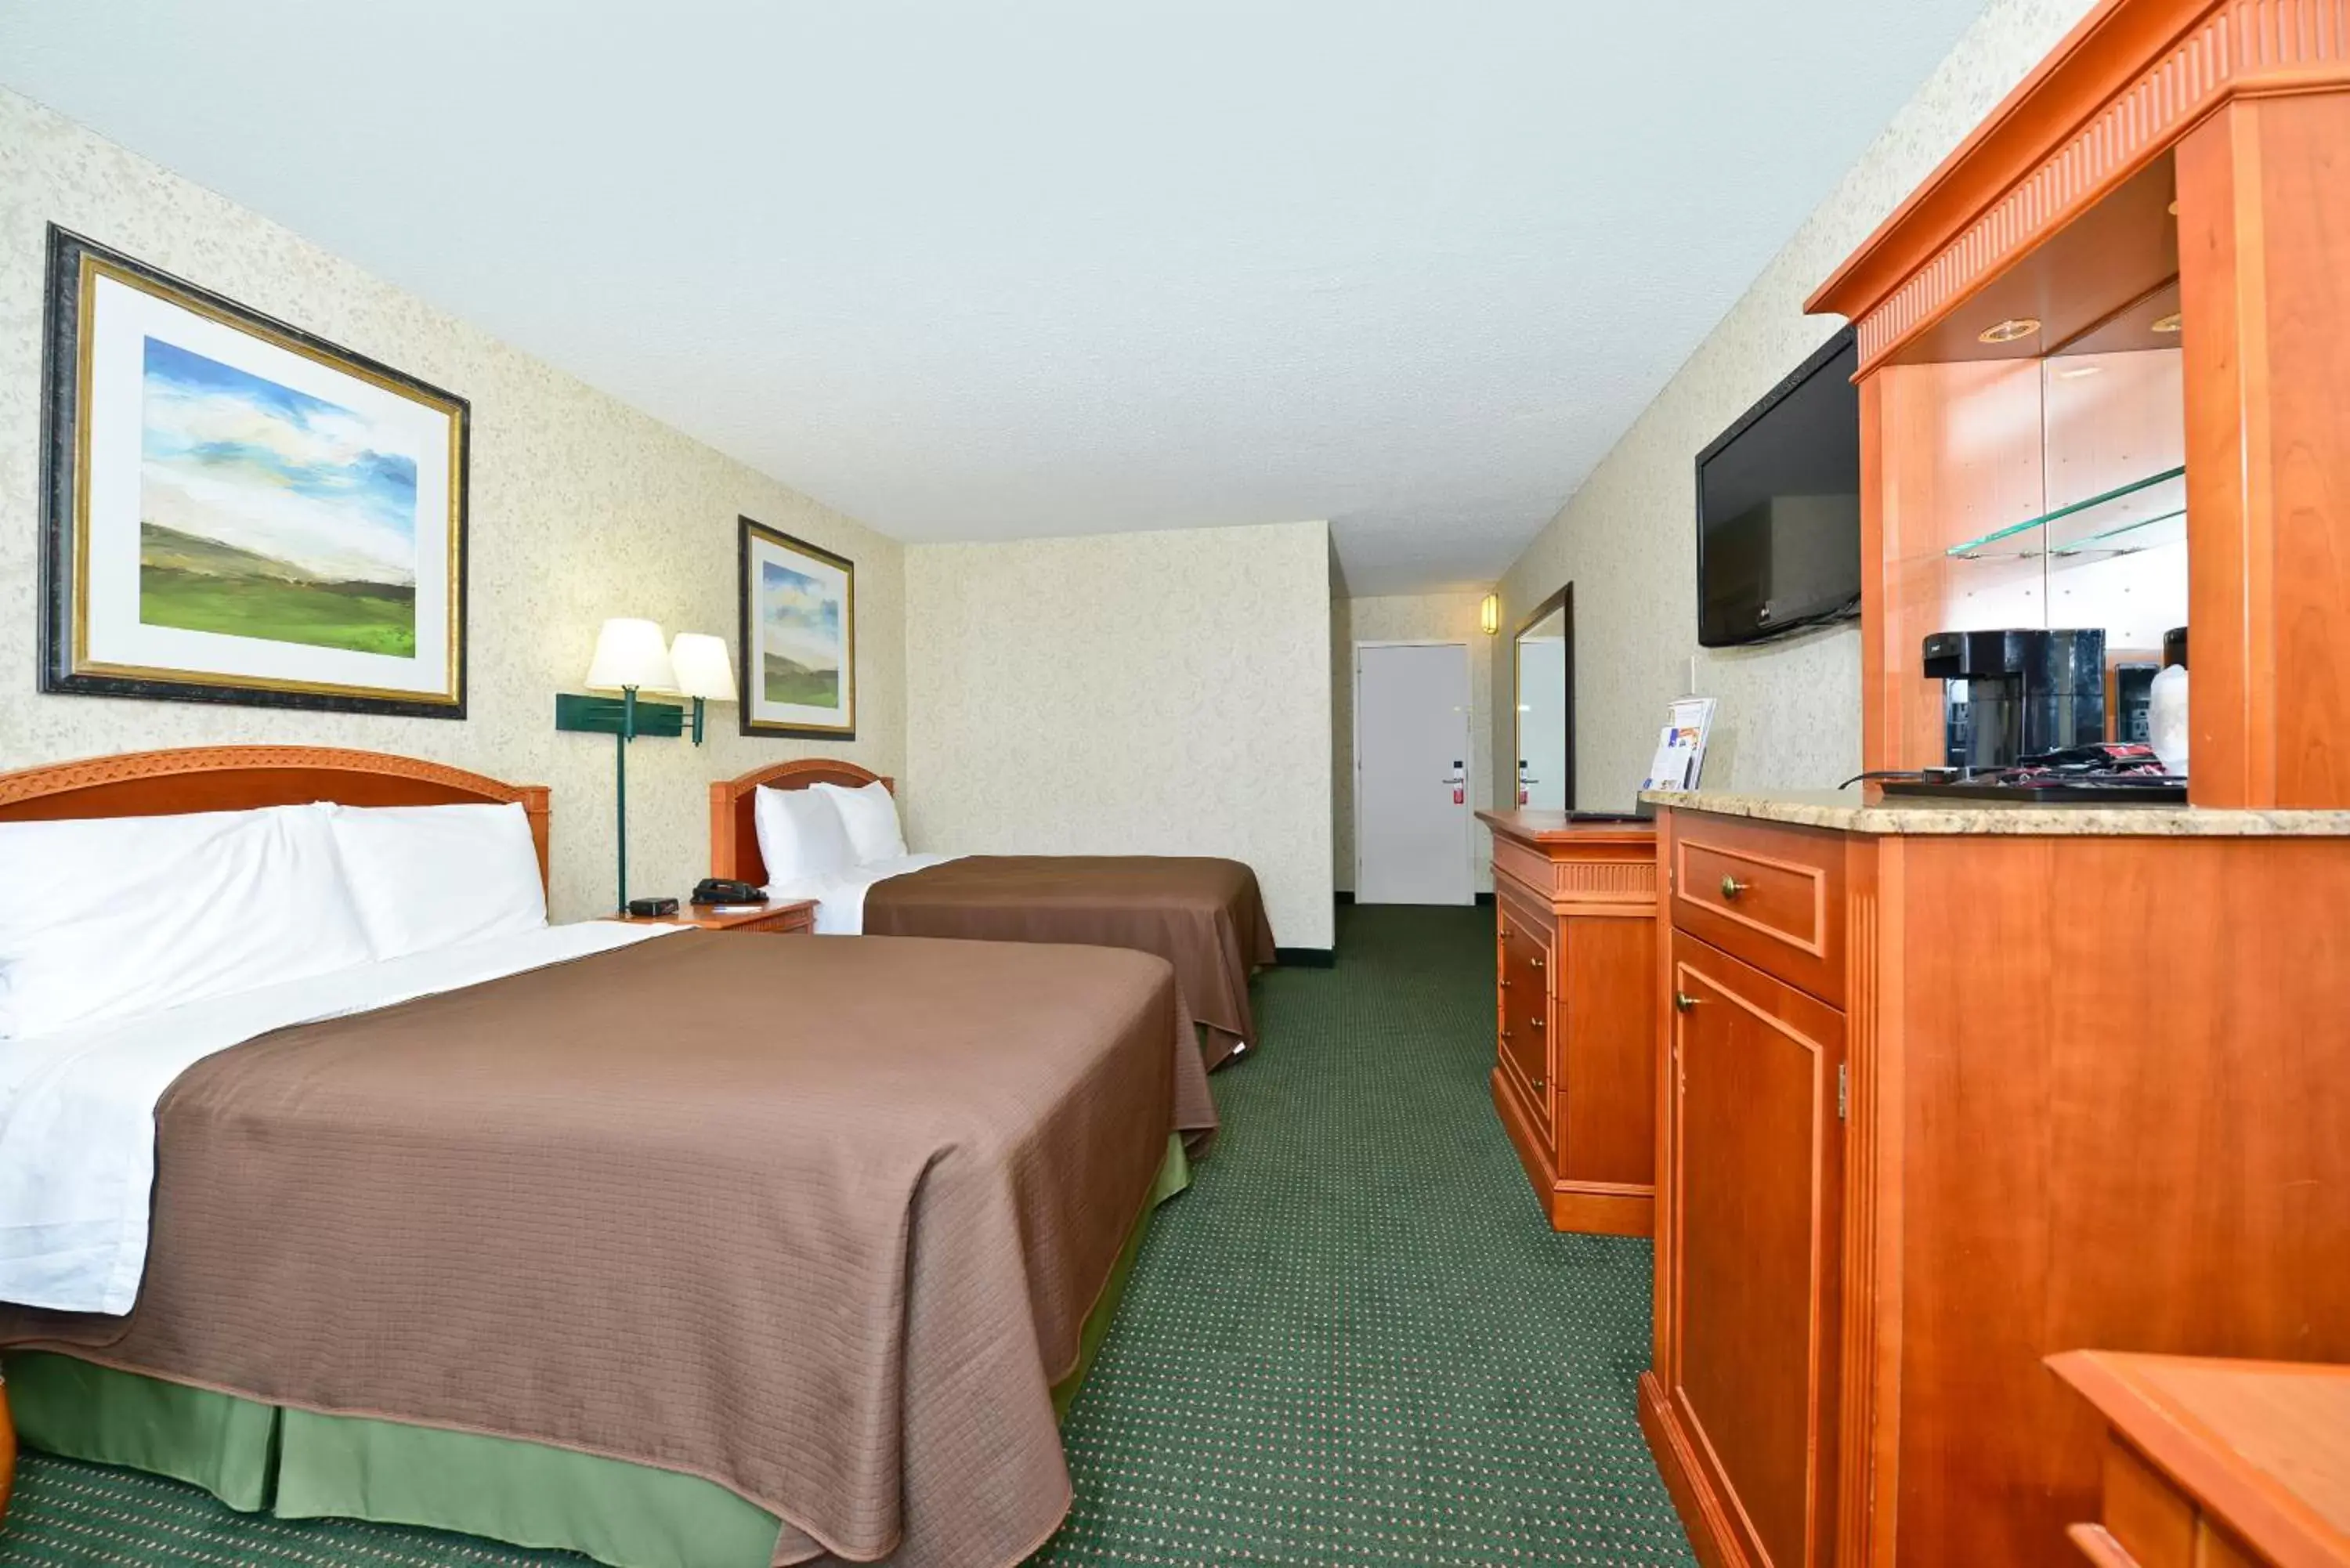 Bedroom in Americas Best Value Inn - Baltimore